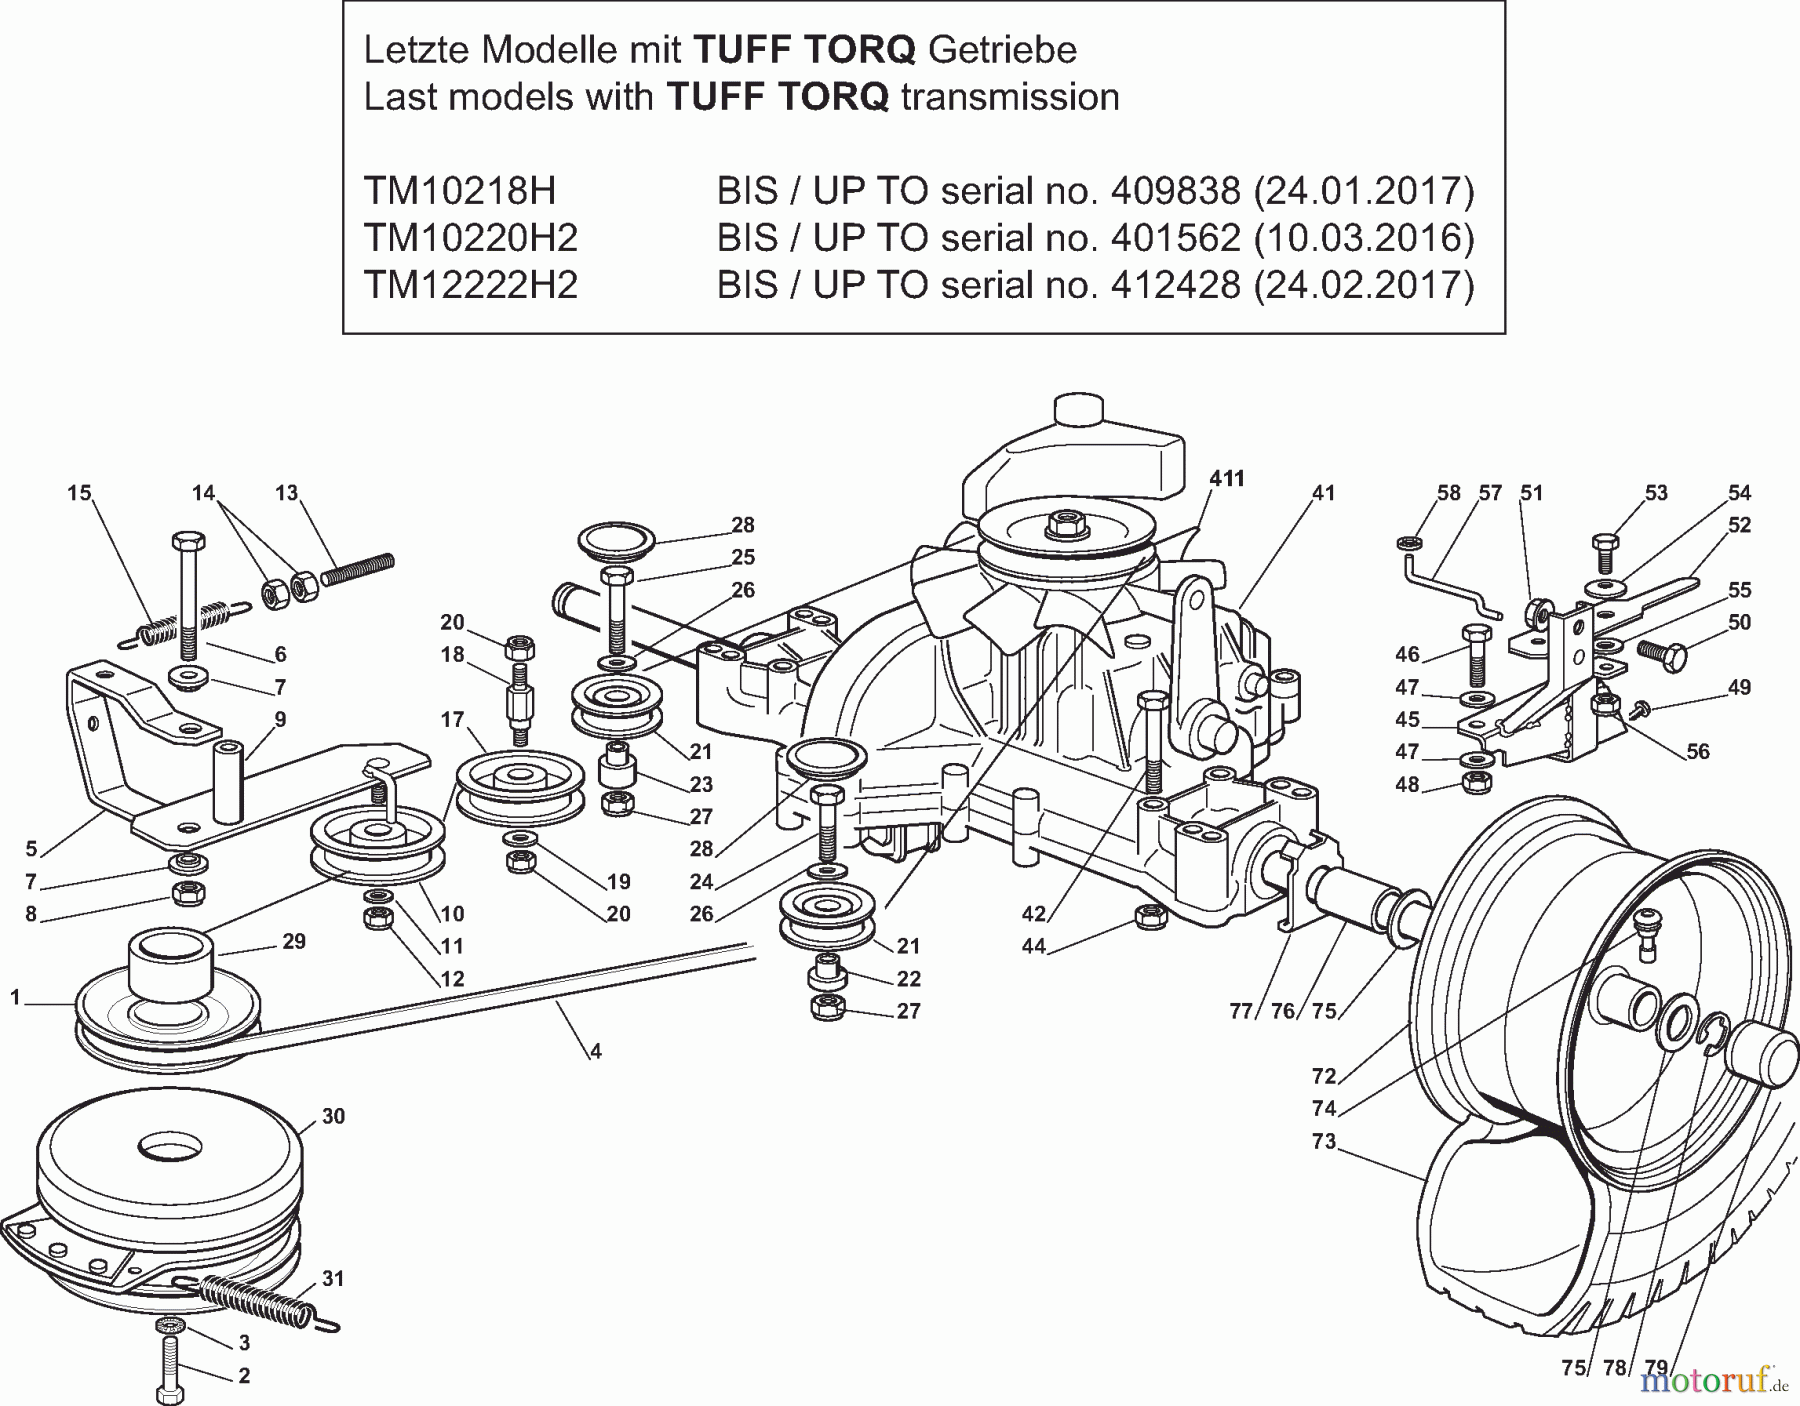  Dolmar Rasentraktoren TM10220H2 TM-102.20 H2 (2012) 6y  Getriebe